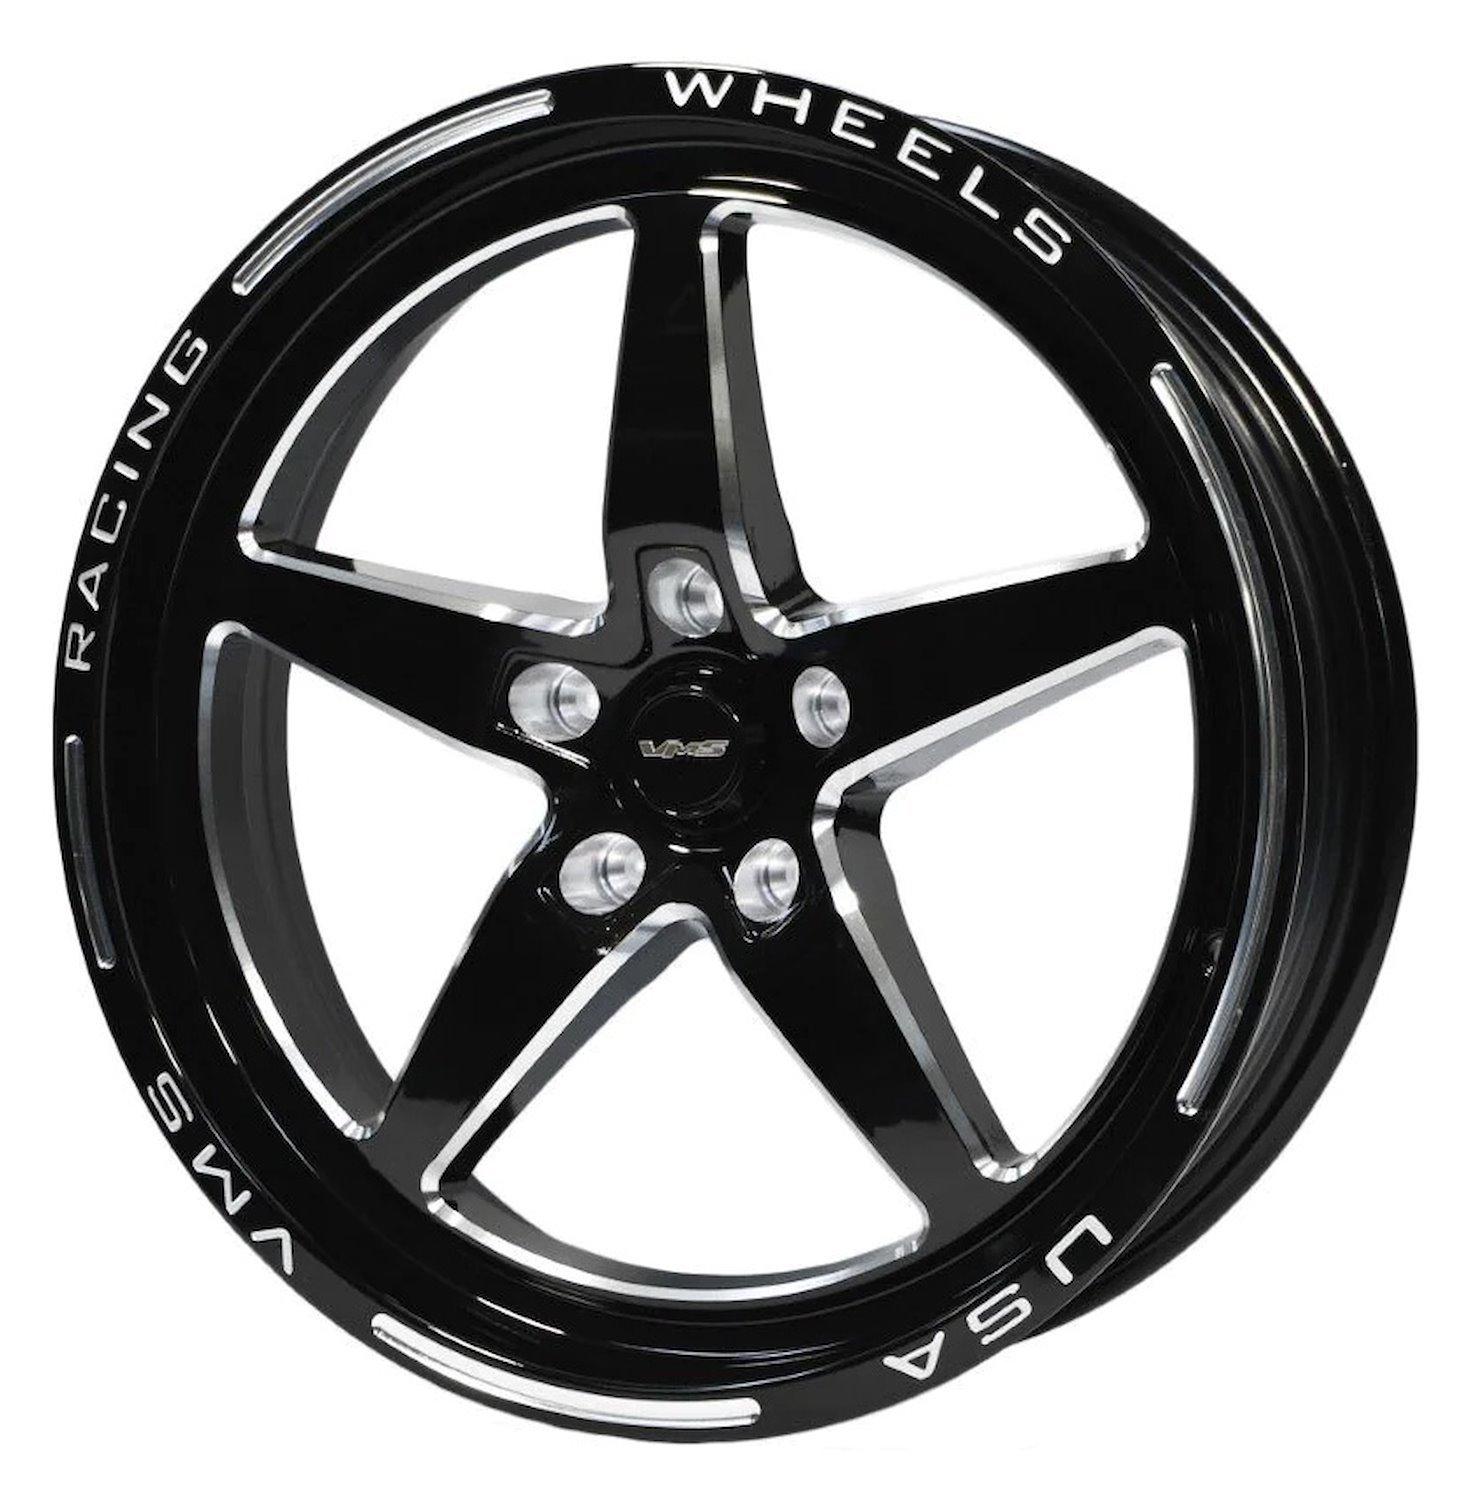 VWST026 V-Star Wheel, Size: 17" x 4.5", Bolt Pattern: 5 x 115 mm [Finish: Gloss Black Milled]